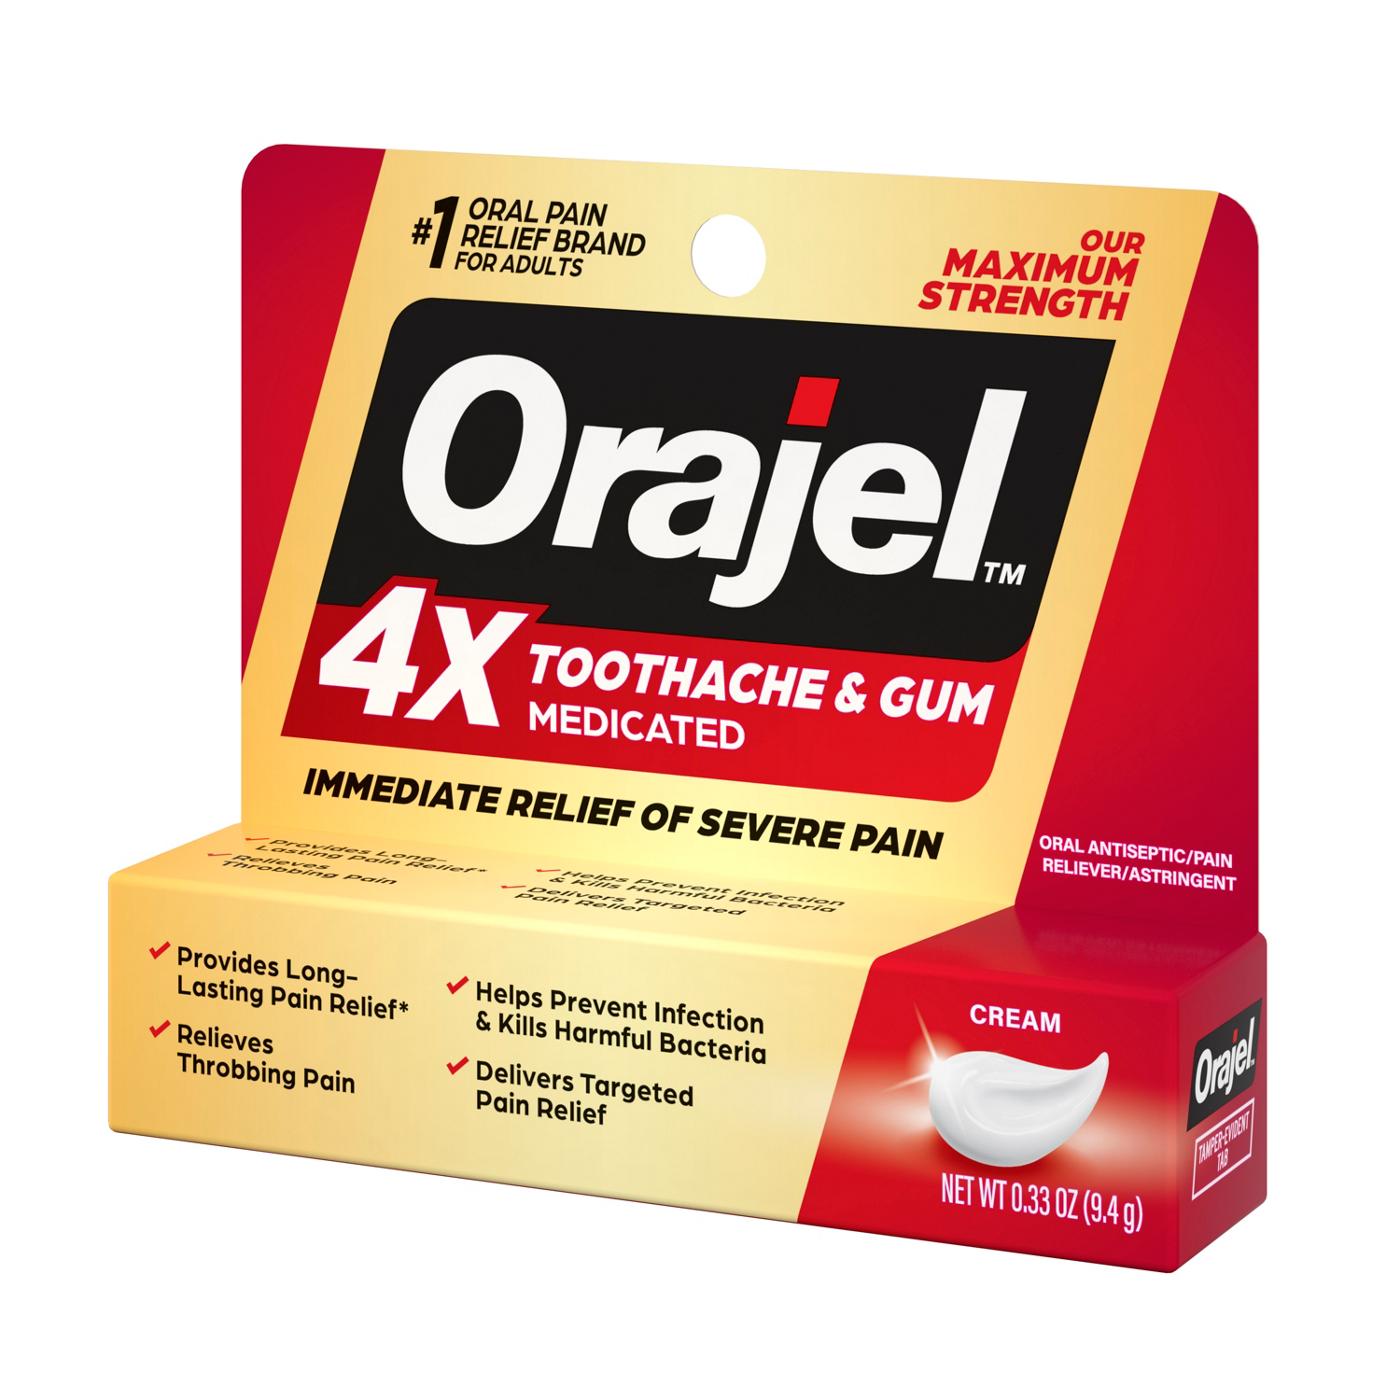 Orajel 4x Medicated Toothache & Gum Instant Pain Relief Cream; image 2 of 2